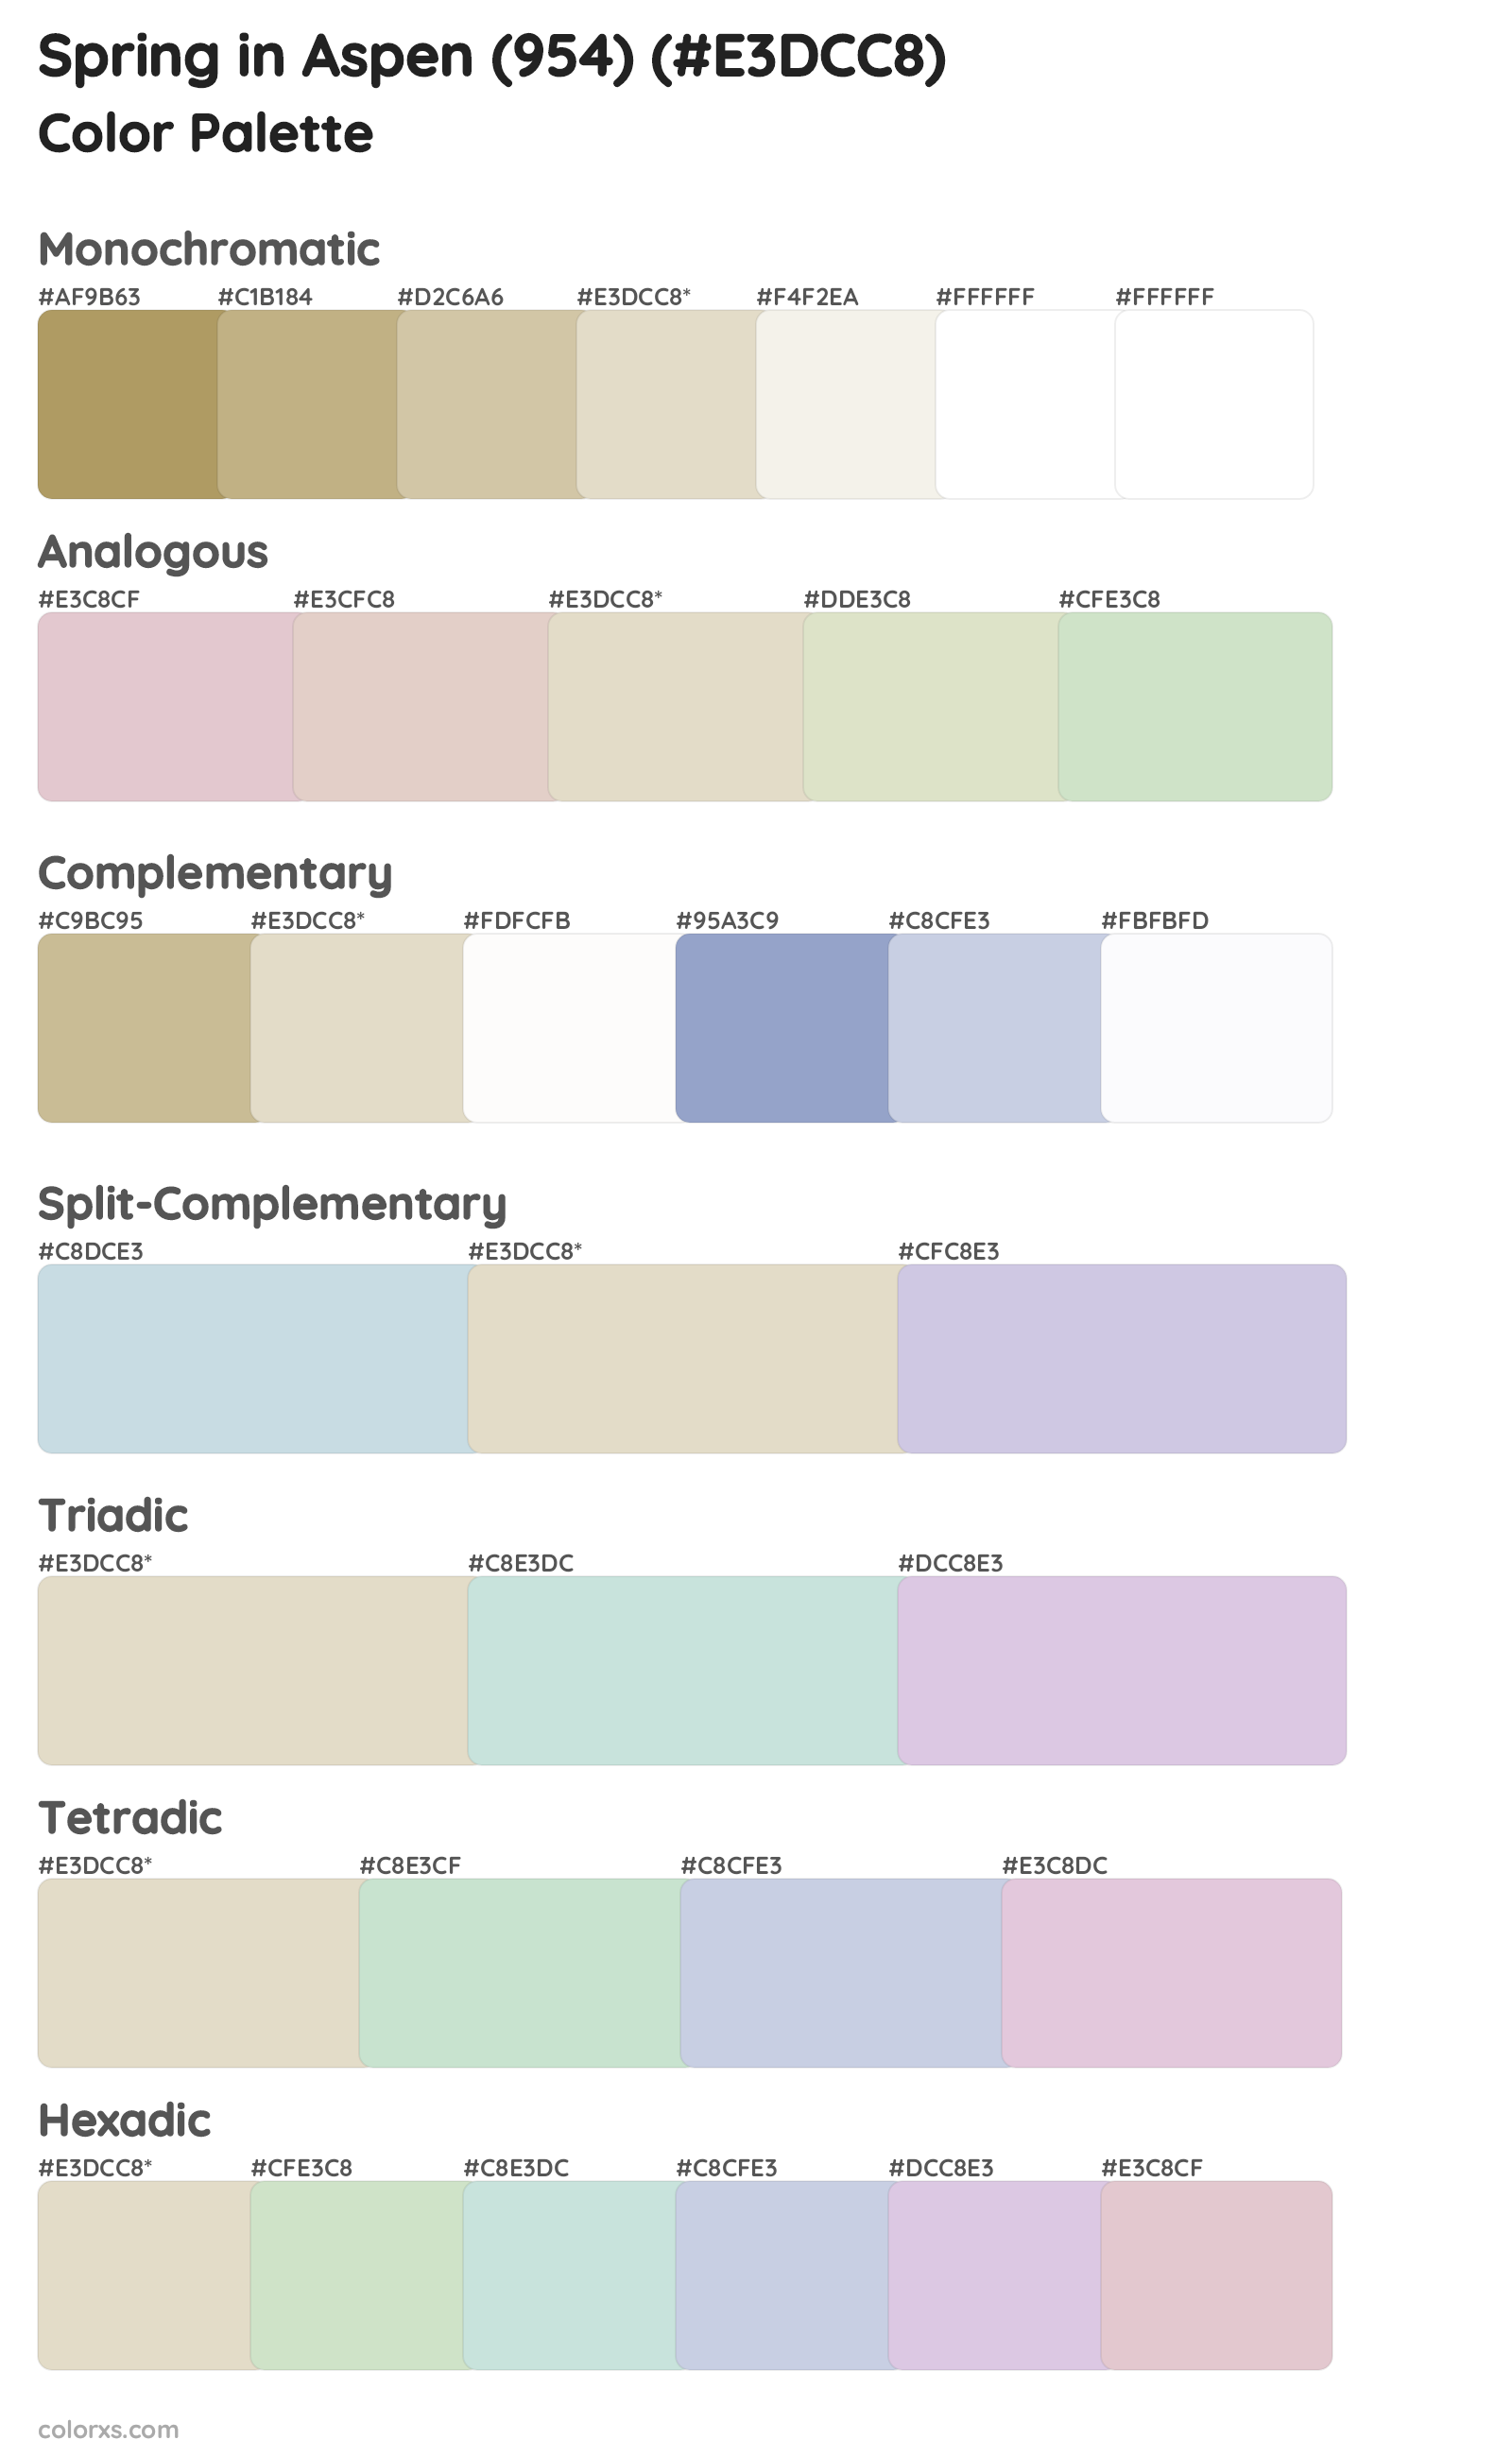 Spring in Aspen (954) Color Scheme Palettes